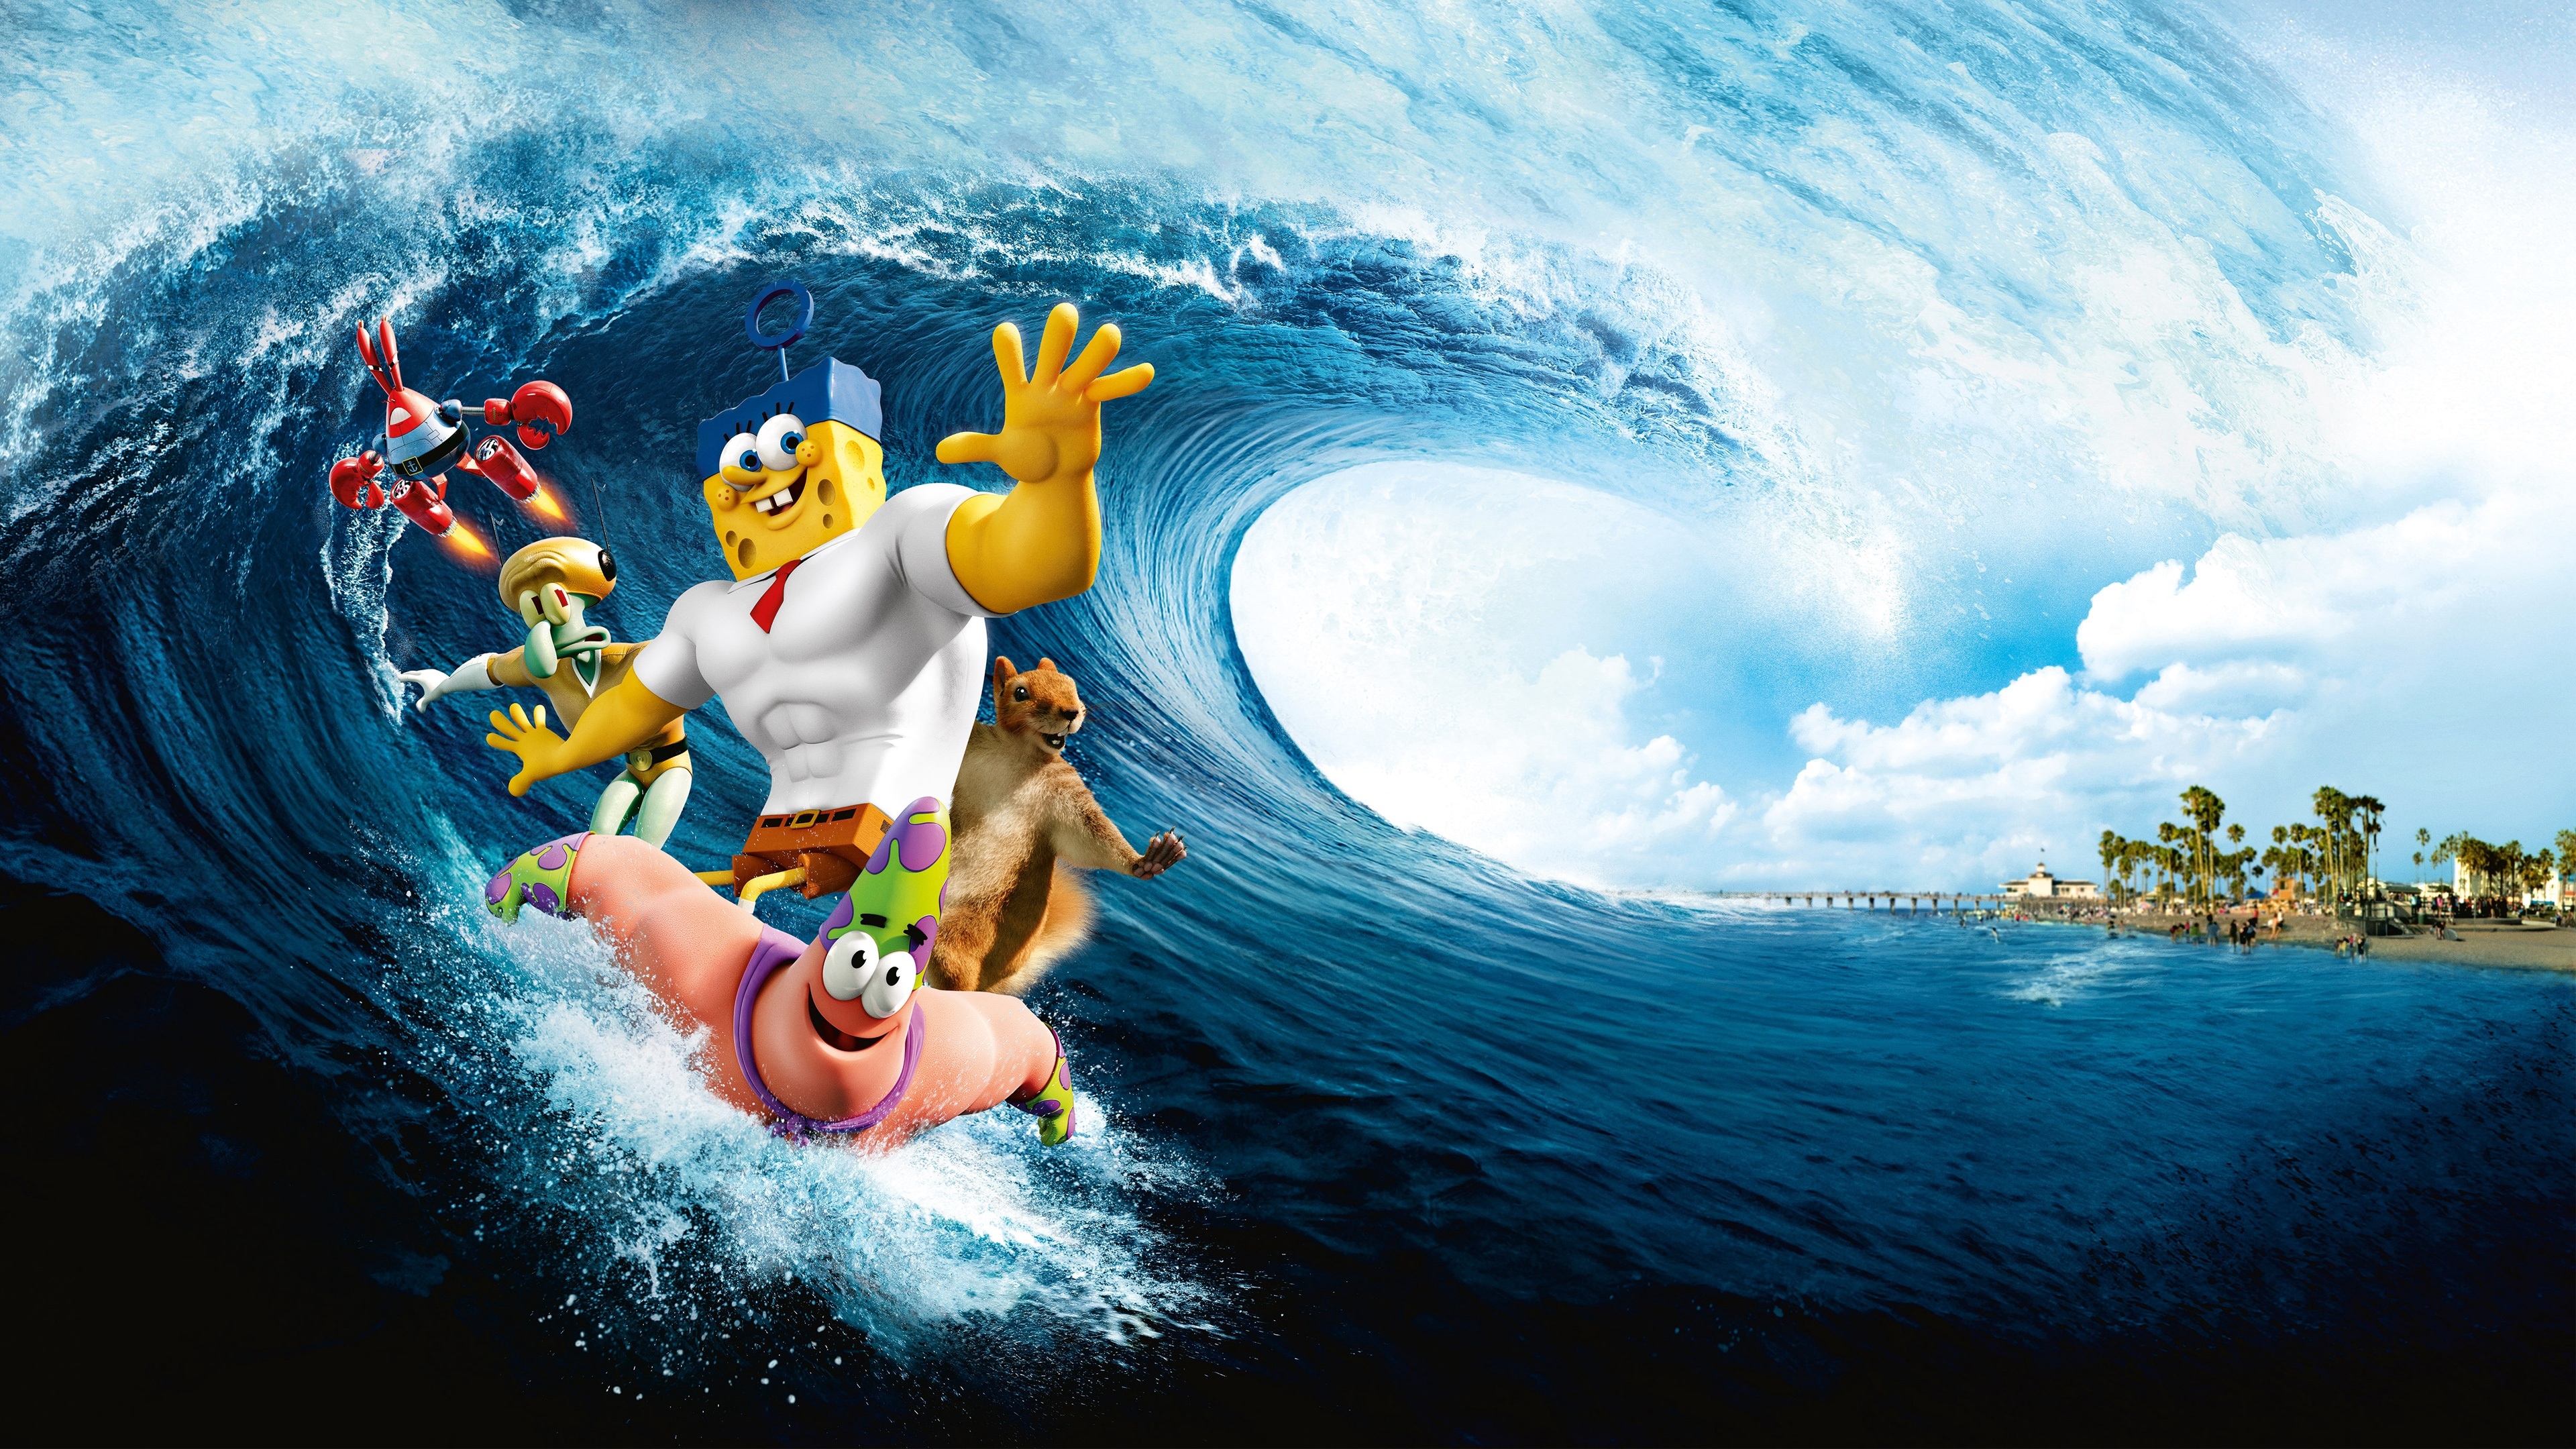 spongebob movie, art, wave 4k Wallpaper